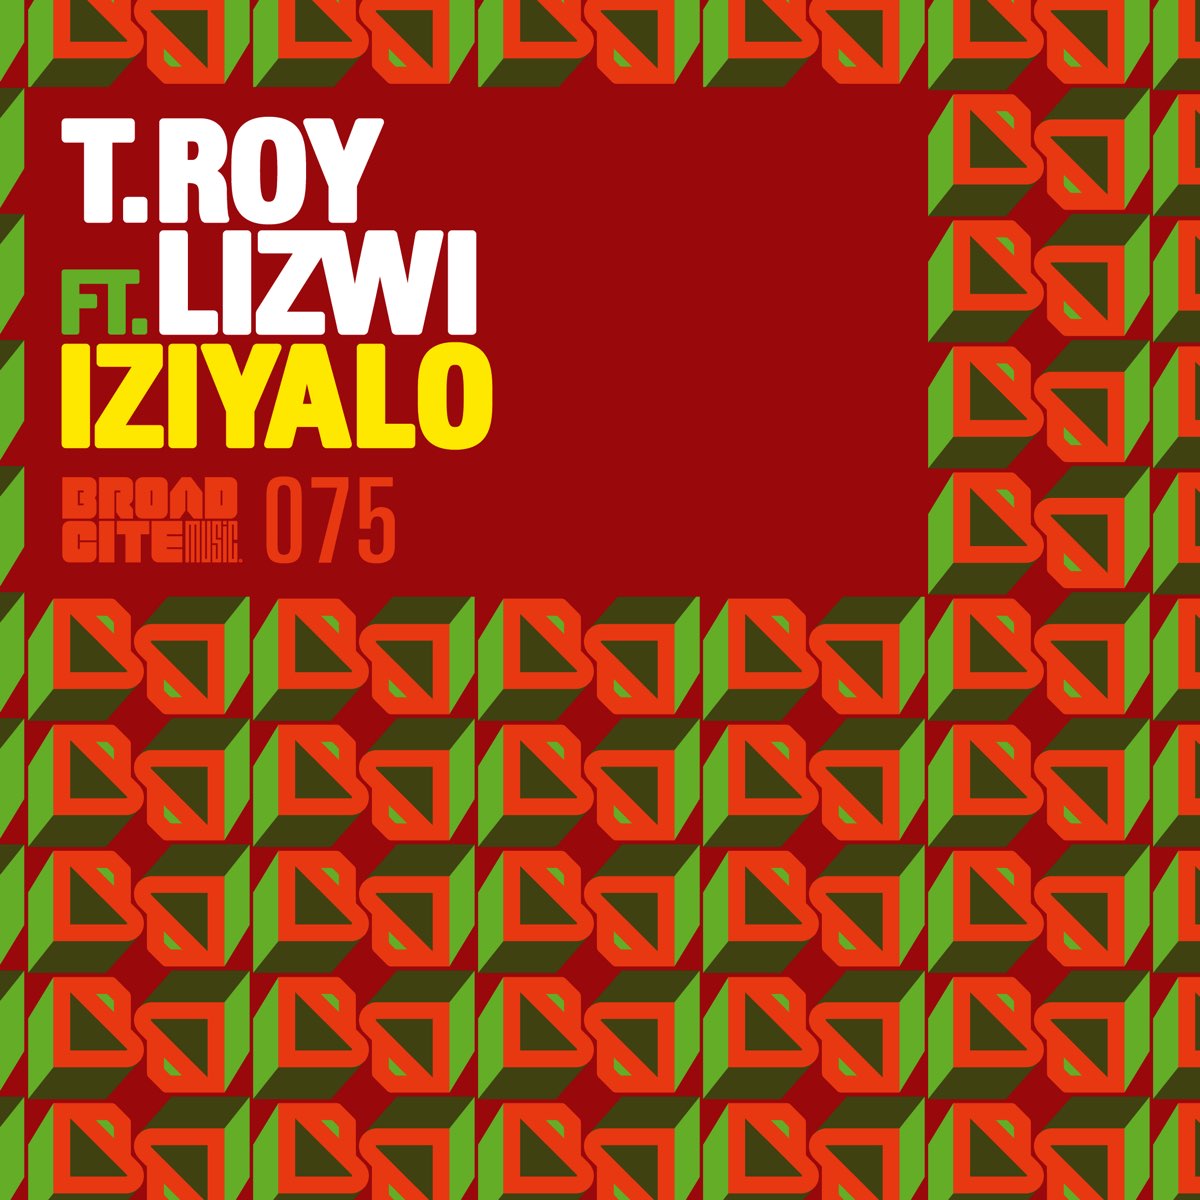 Joezi feat lizwi рингтон. T'Roy. Lizwi. S'T'Roy Mix. Waves & WAVS (feat. Lizwi) от Ahmed Spins.